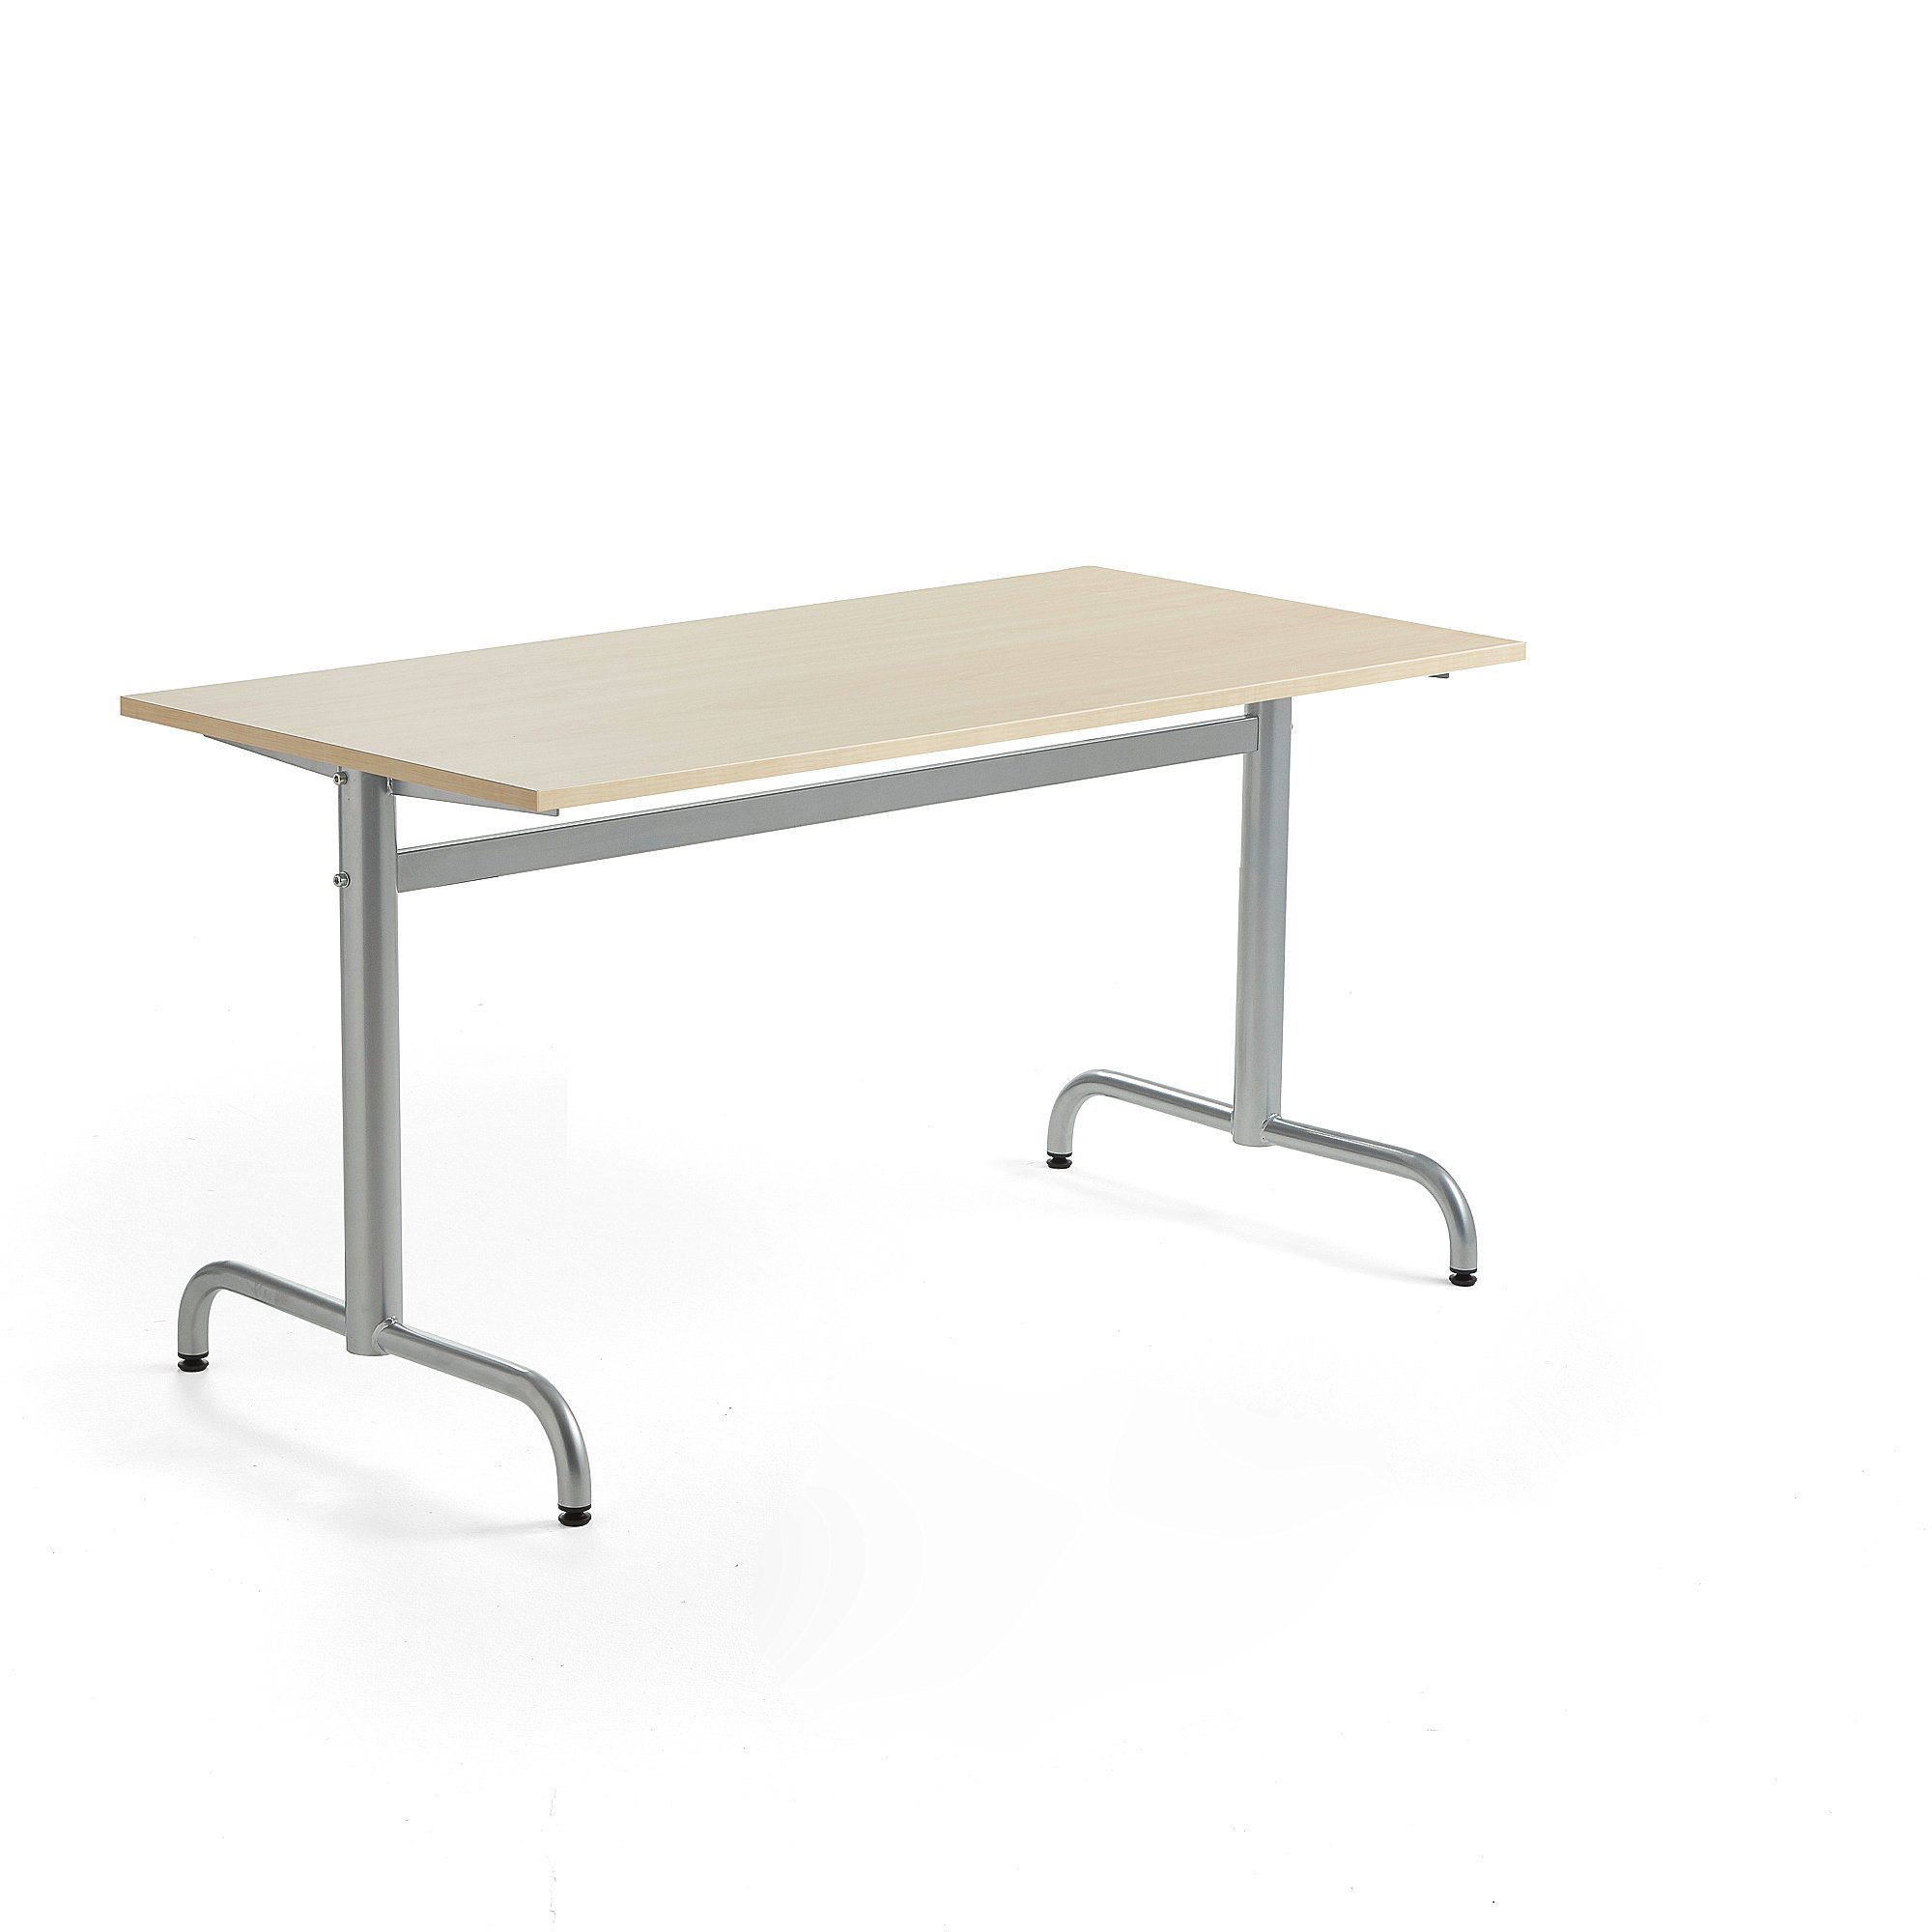 Stůl PLURAL, 1400x700x720 mm, akustická HPL deska, bříza, stříbrná